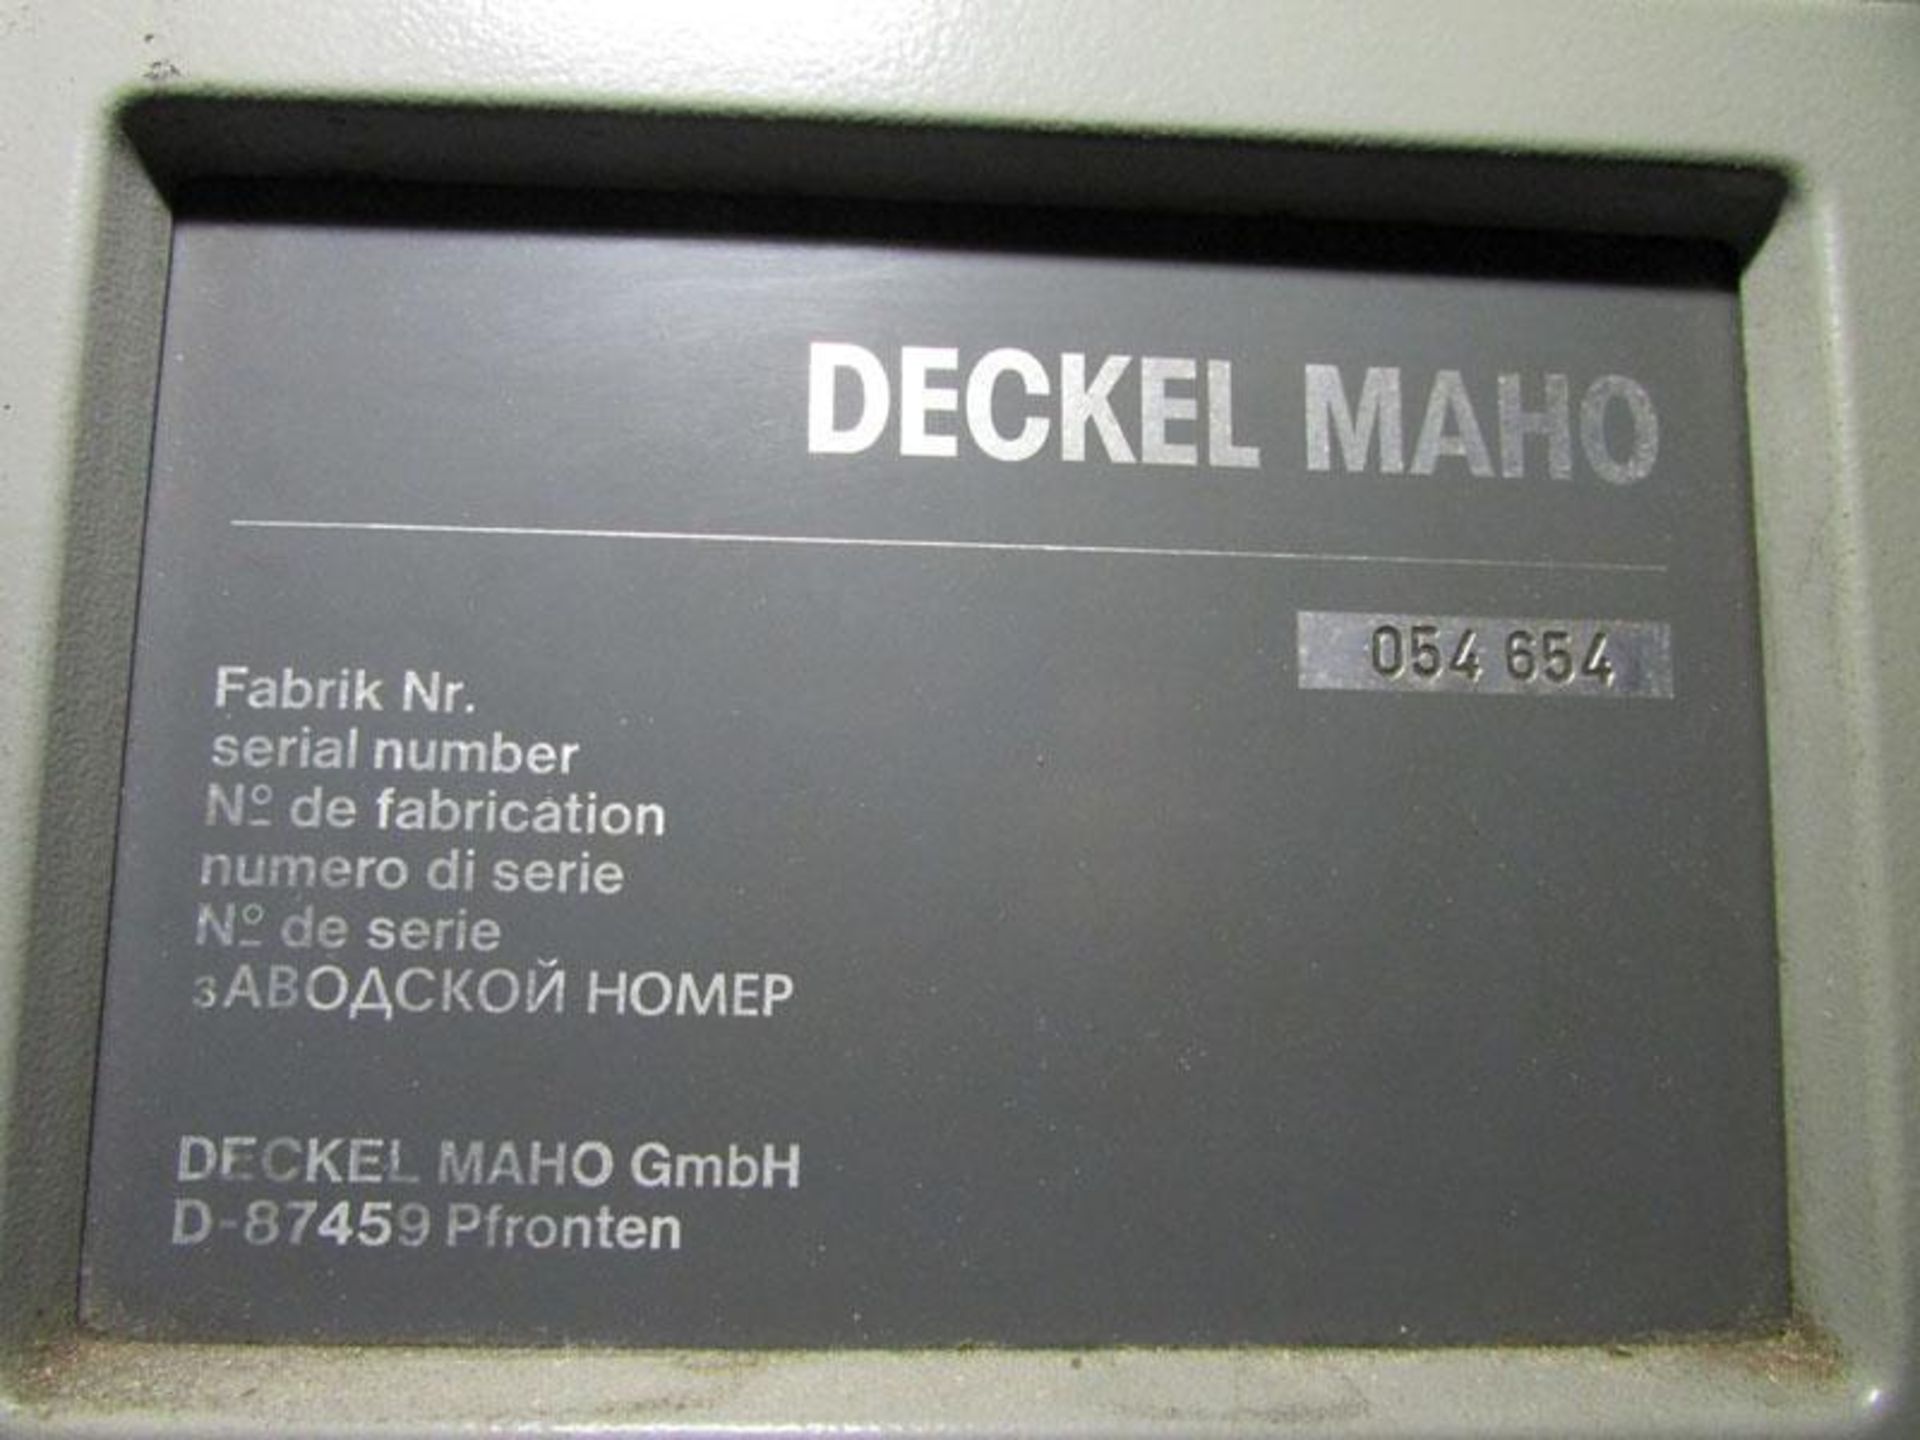 Deckel Maho DMU 50V Vertical CNC Machining Center - Image 15 of 15